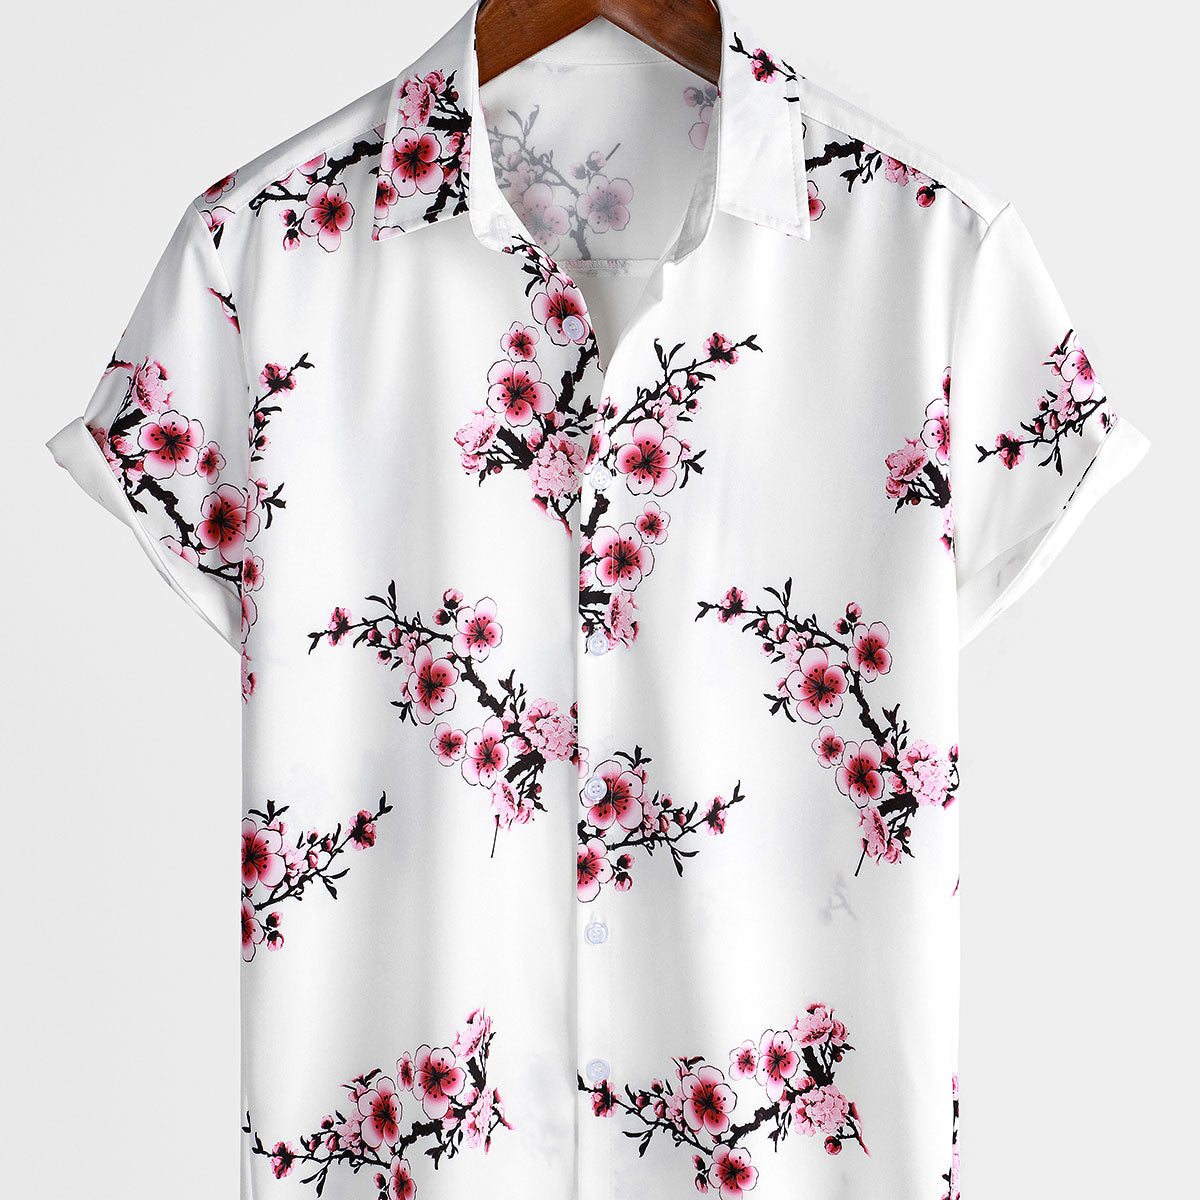 Men's Cherry Blossoms Floral Holiday Summer Short Sleeve Button Up Shirt